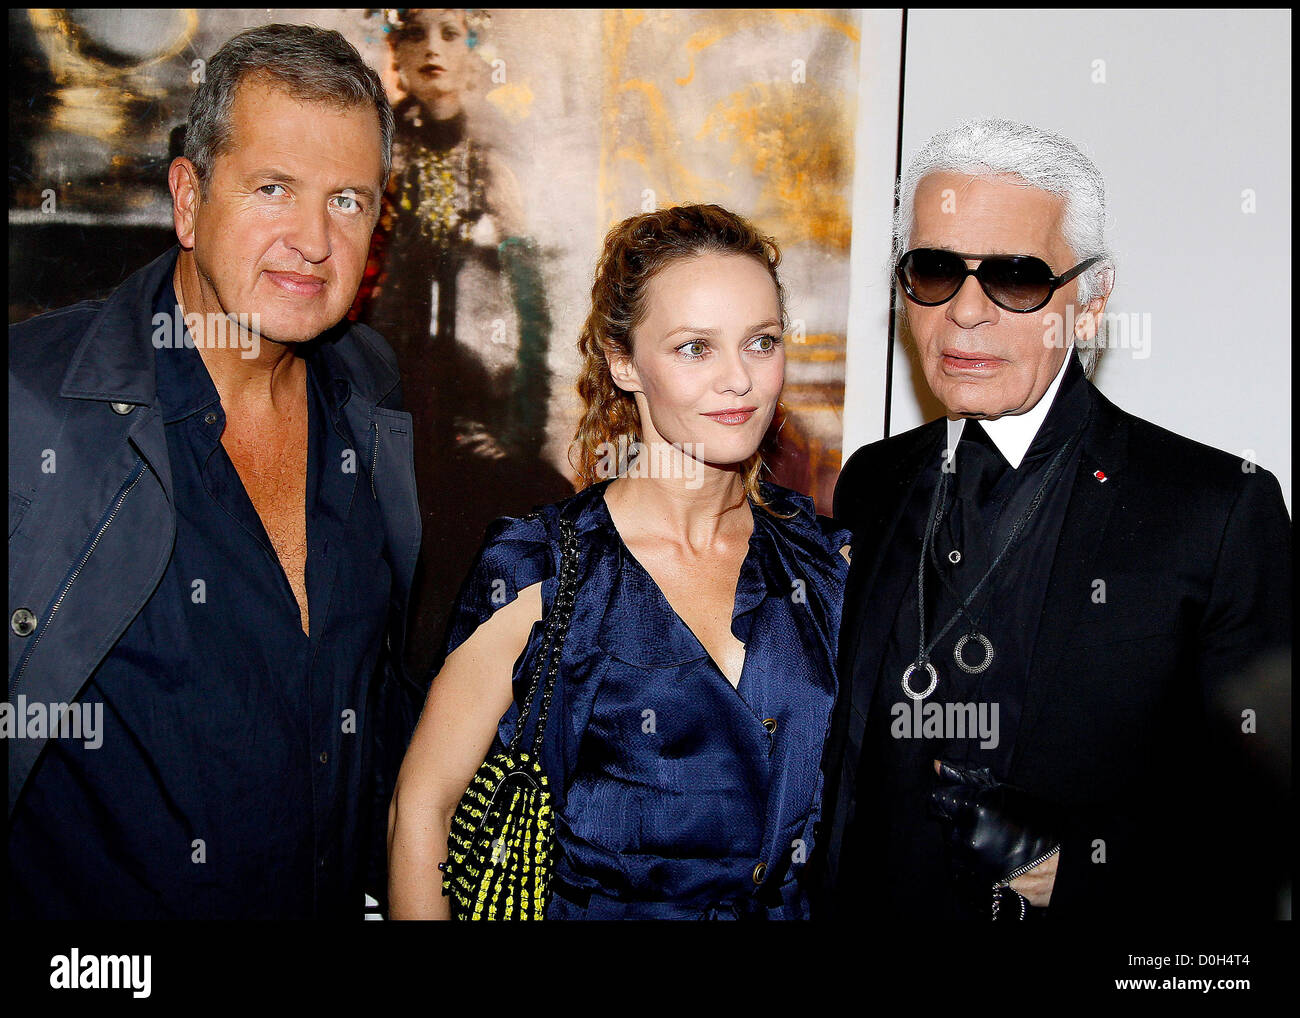 Mario Testino, Vanessa Paradis and Karl Lagerfeld, at the Karl Lagerfeld  Exhibition Launch at Maison Europeenne de la Stock Photo - Alamy